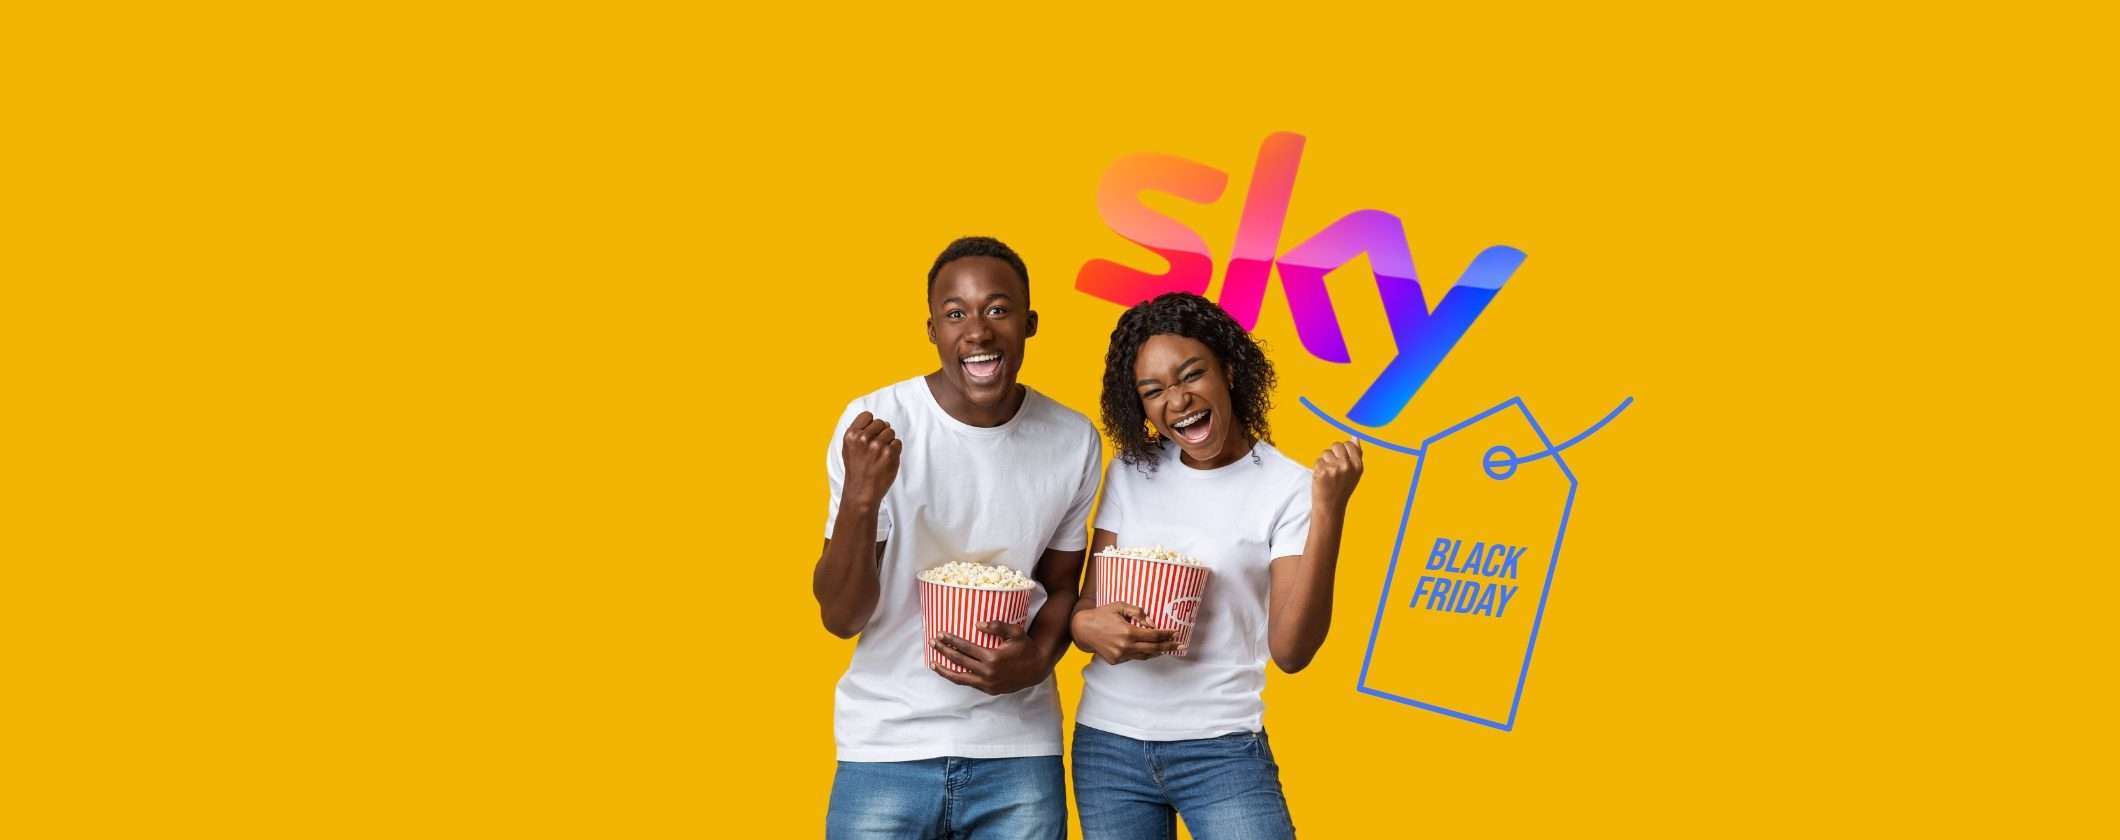 Black Friday Sky: Intrattenimento Plus + Sky Cinema e Buono Regalo Amazon a 19,90€